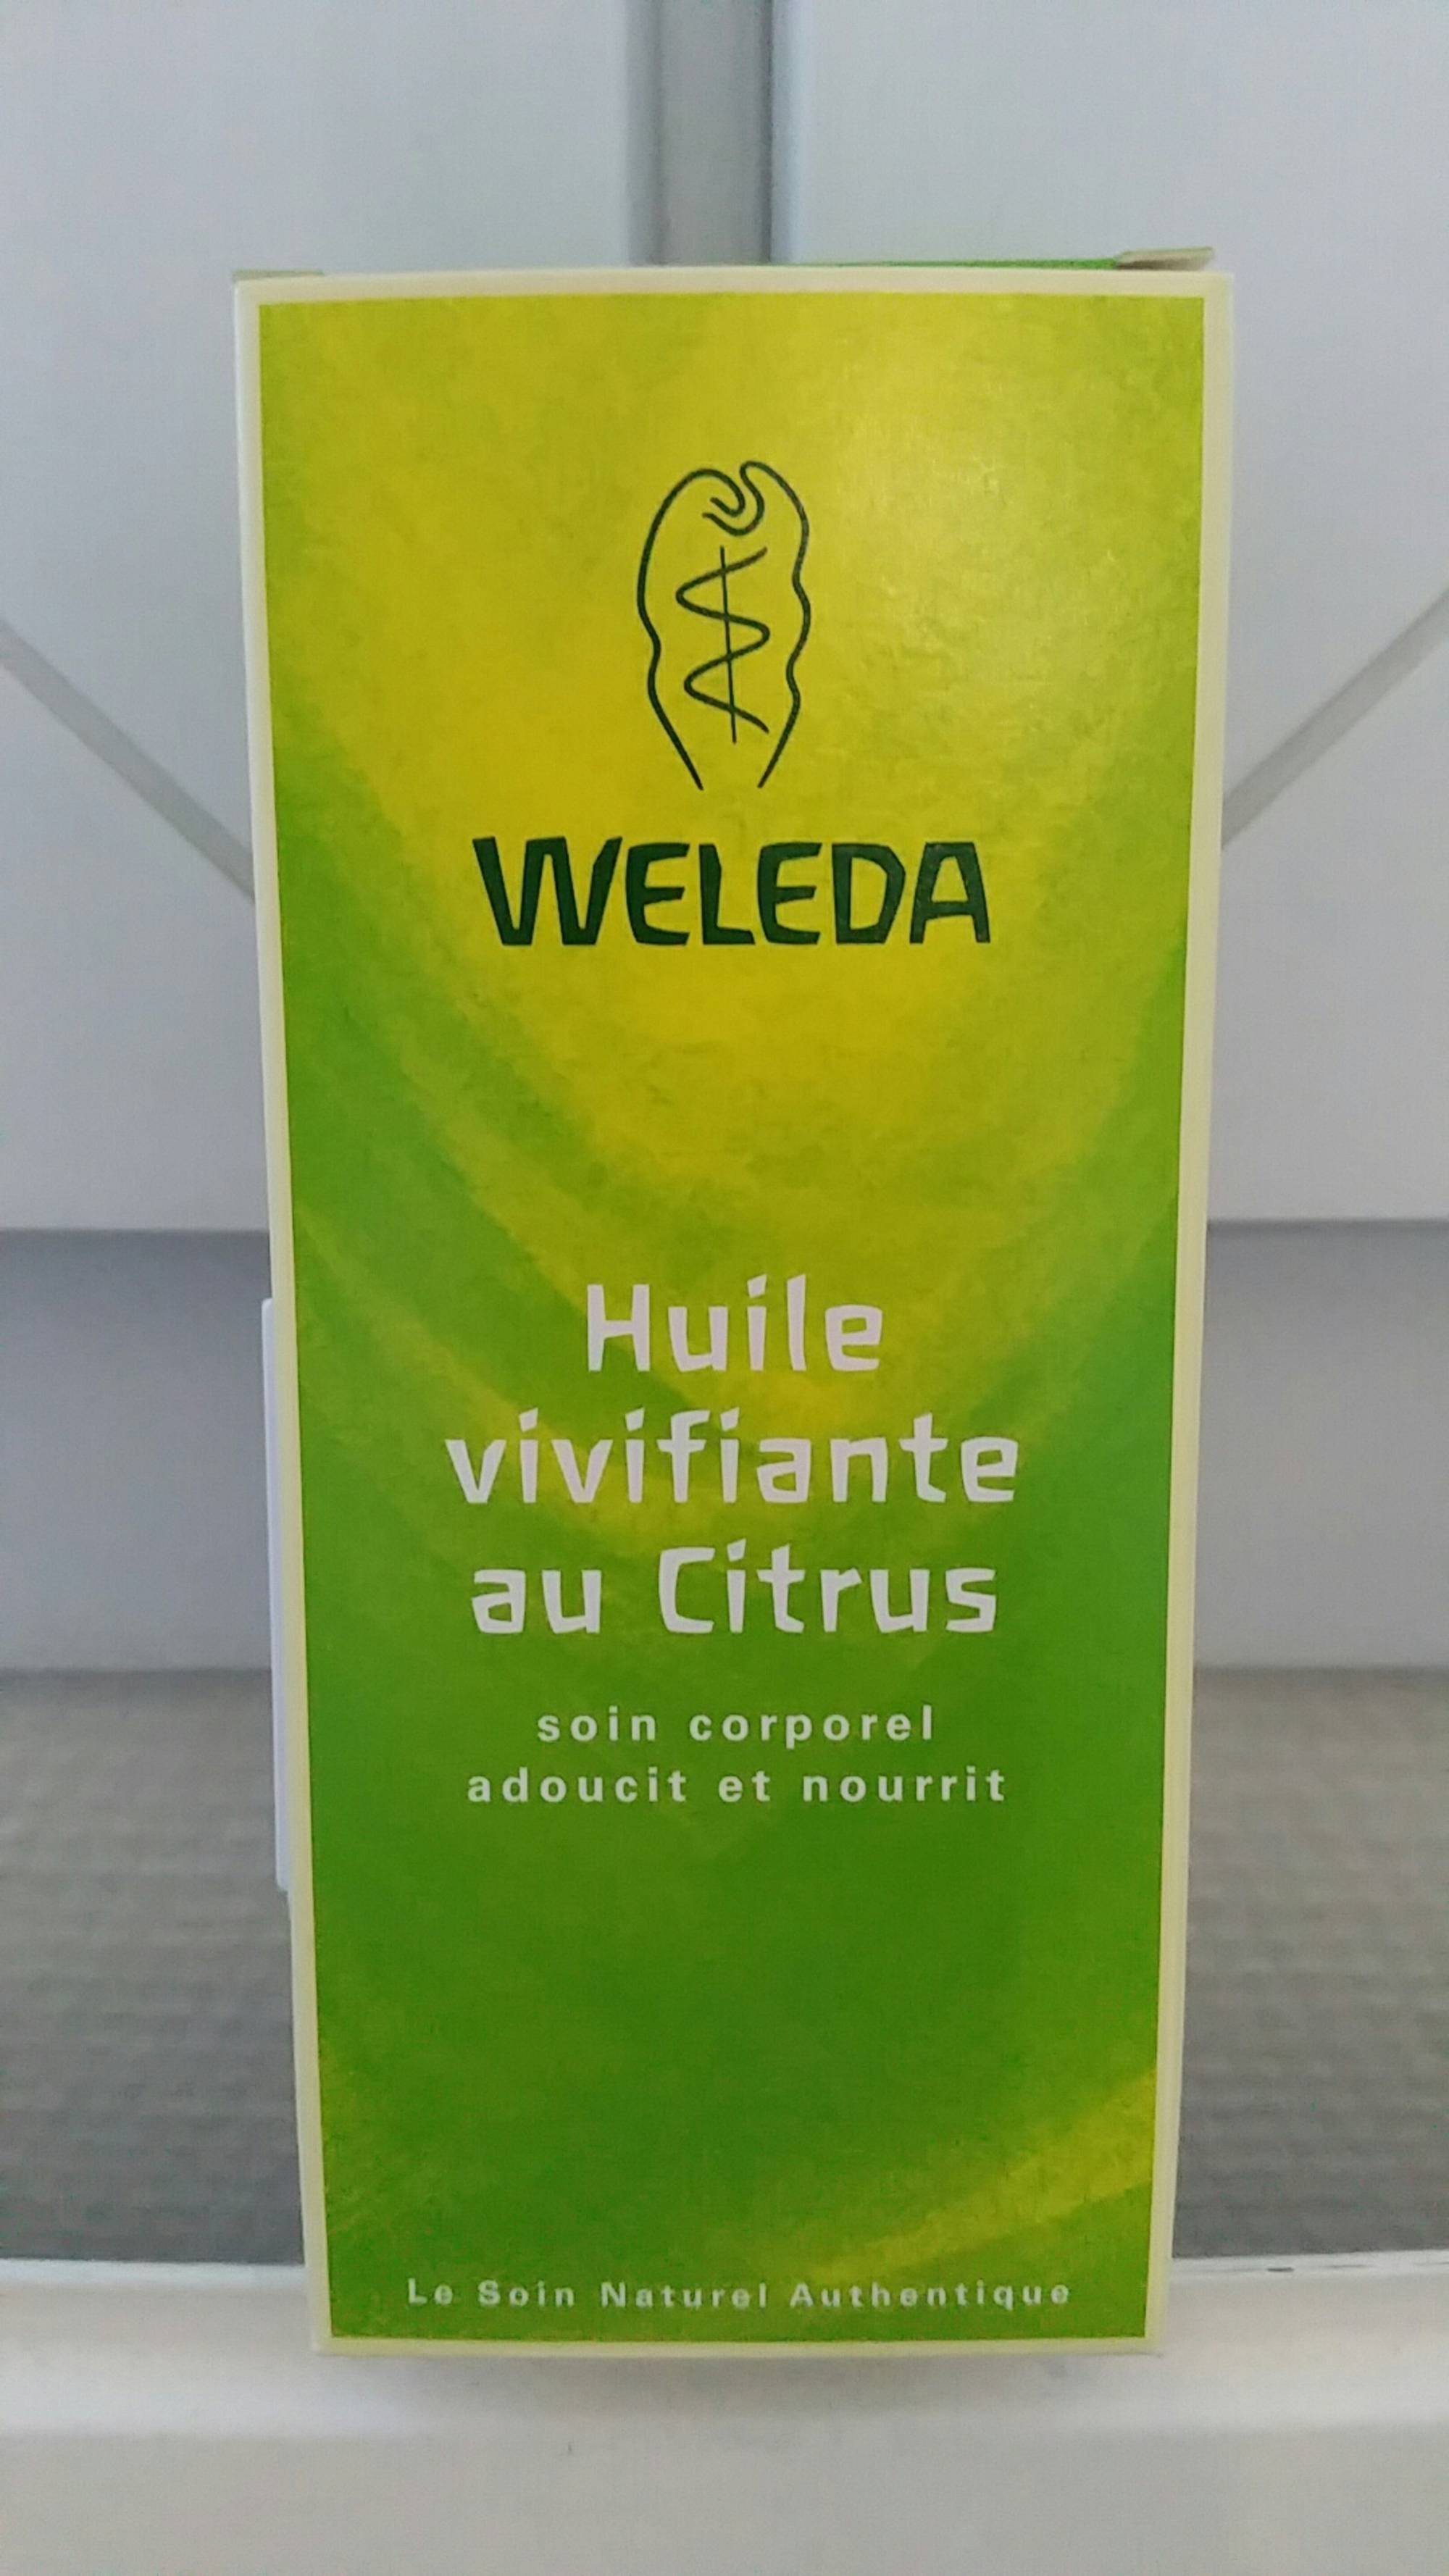 WELEDA - Huile vivifiante au citrus 